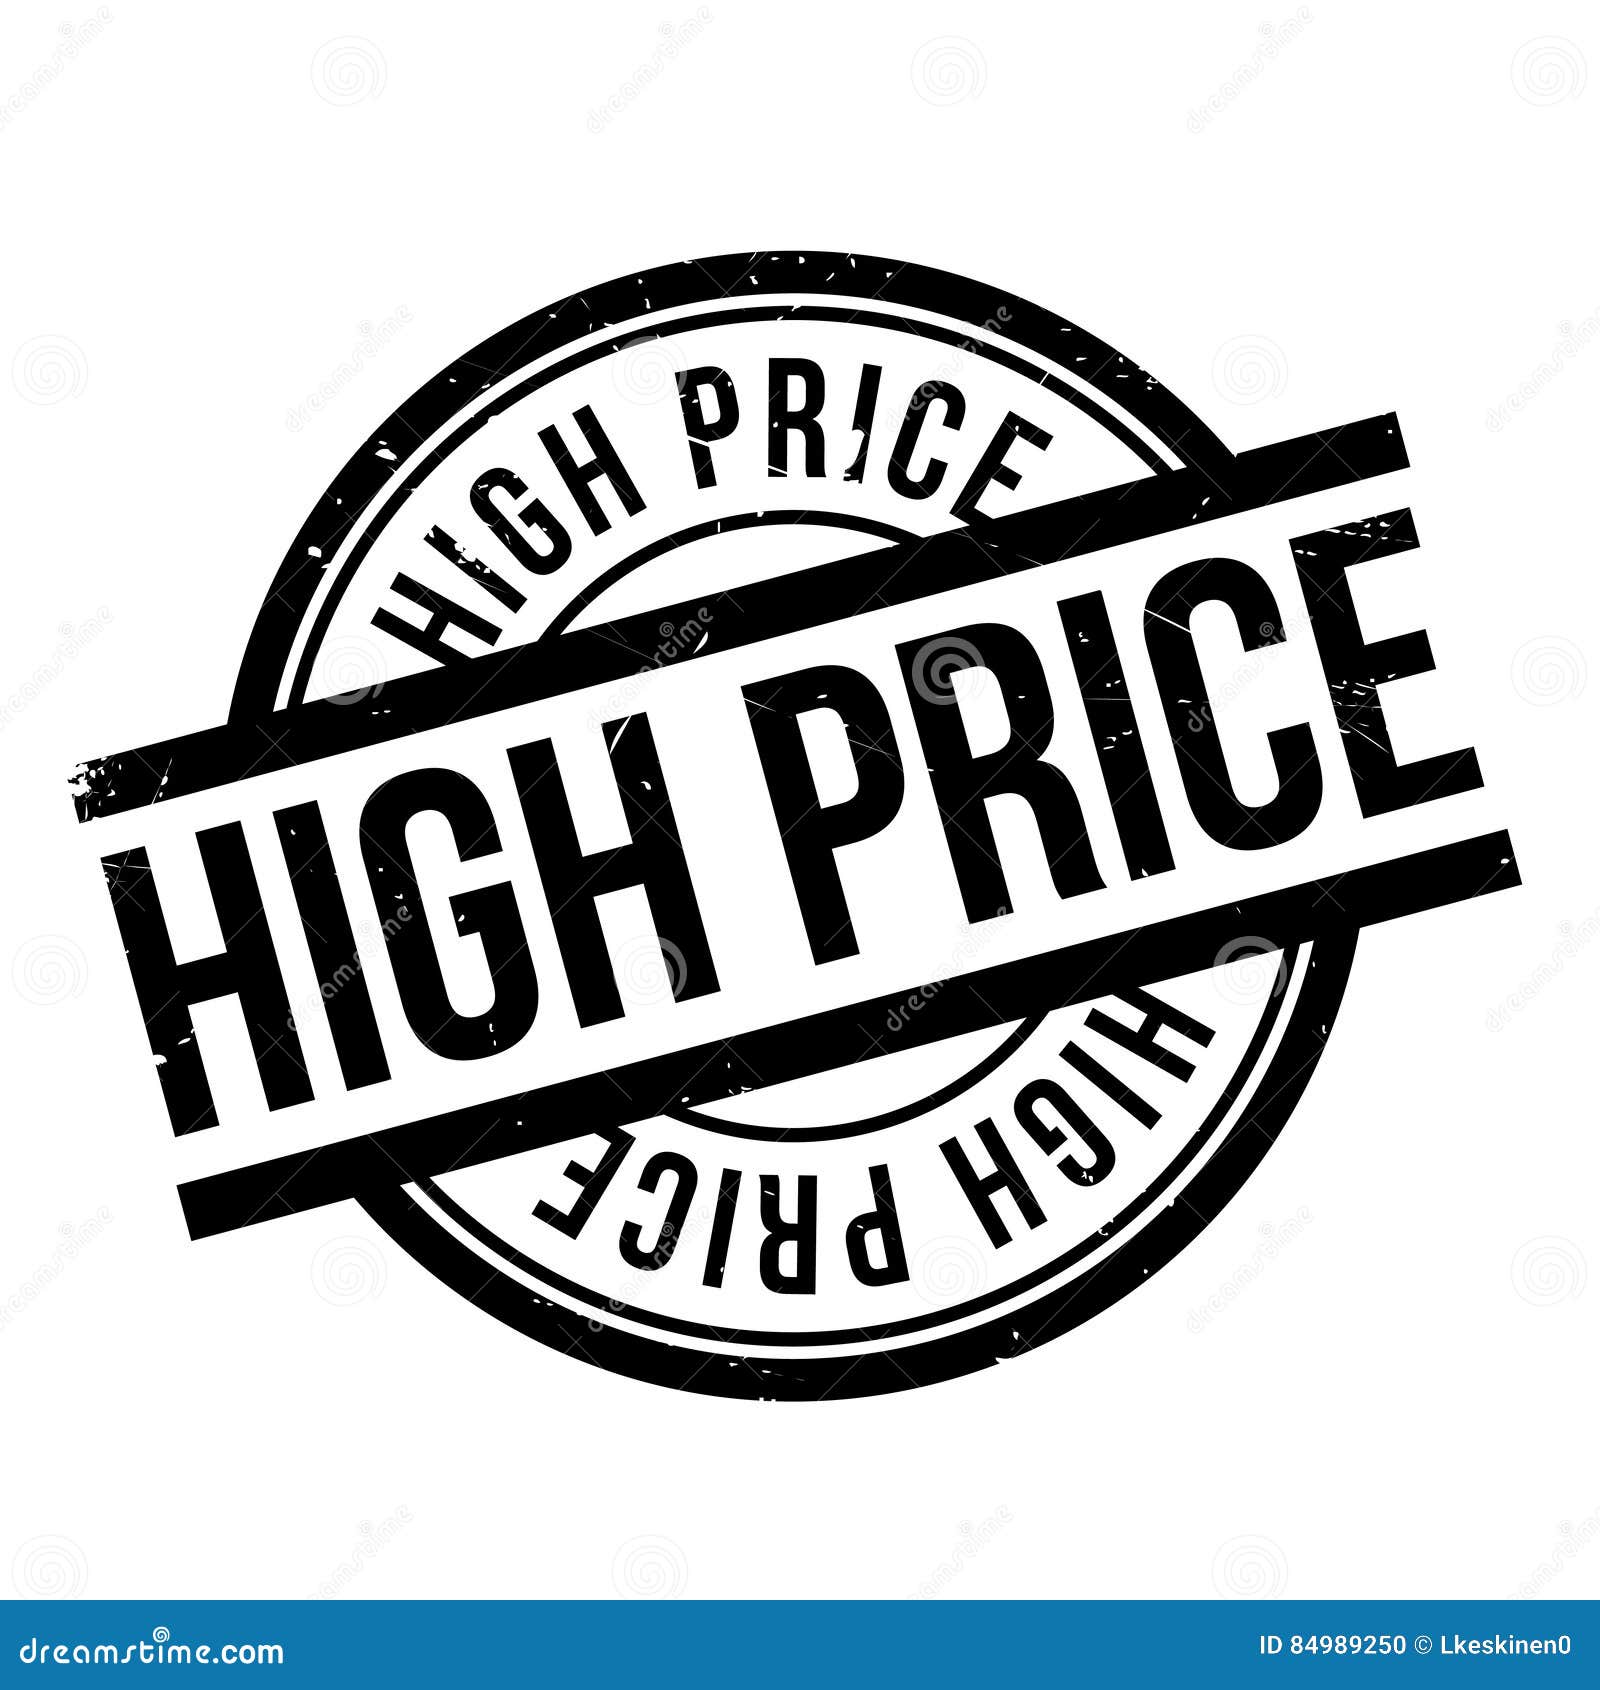 Too high price. A High Price. Higher Price. The Price. Штамп новый прайс.